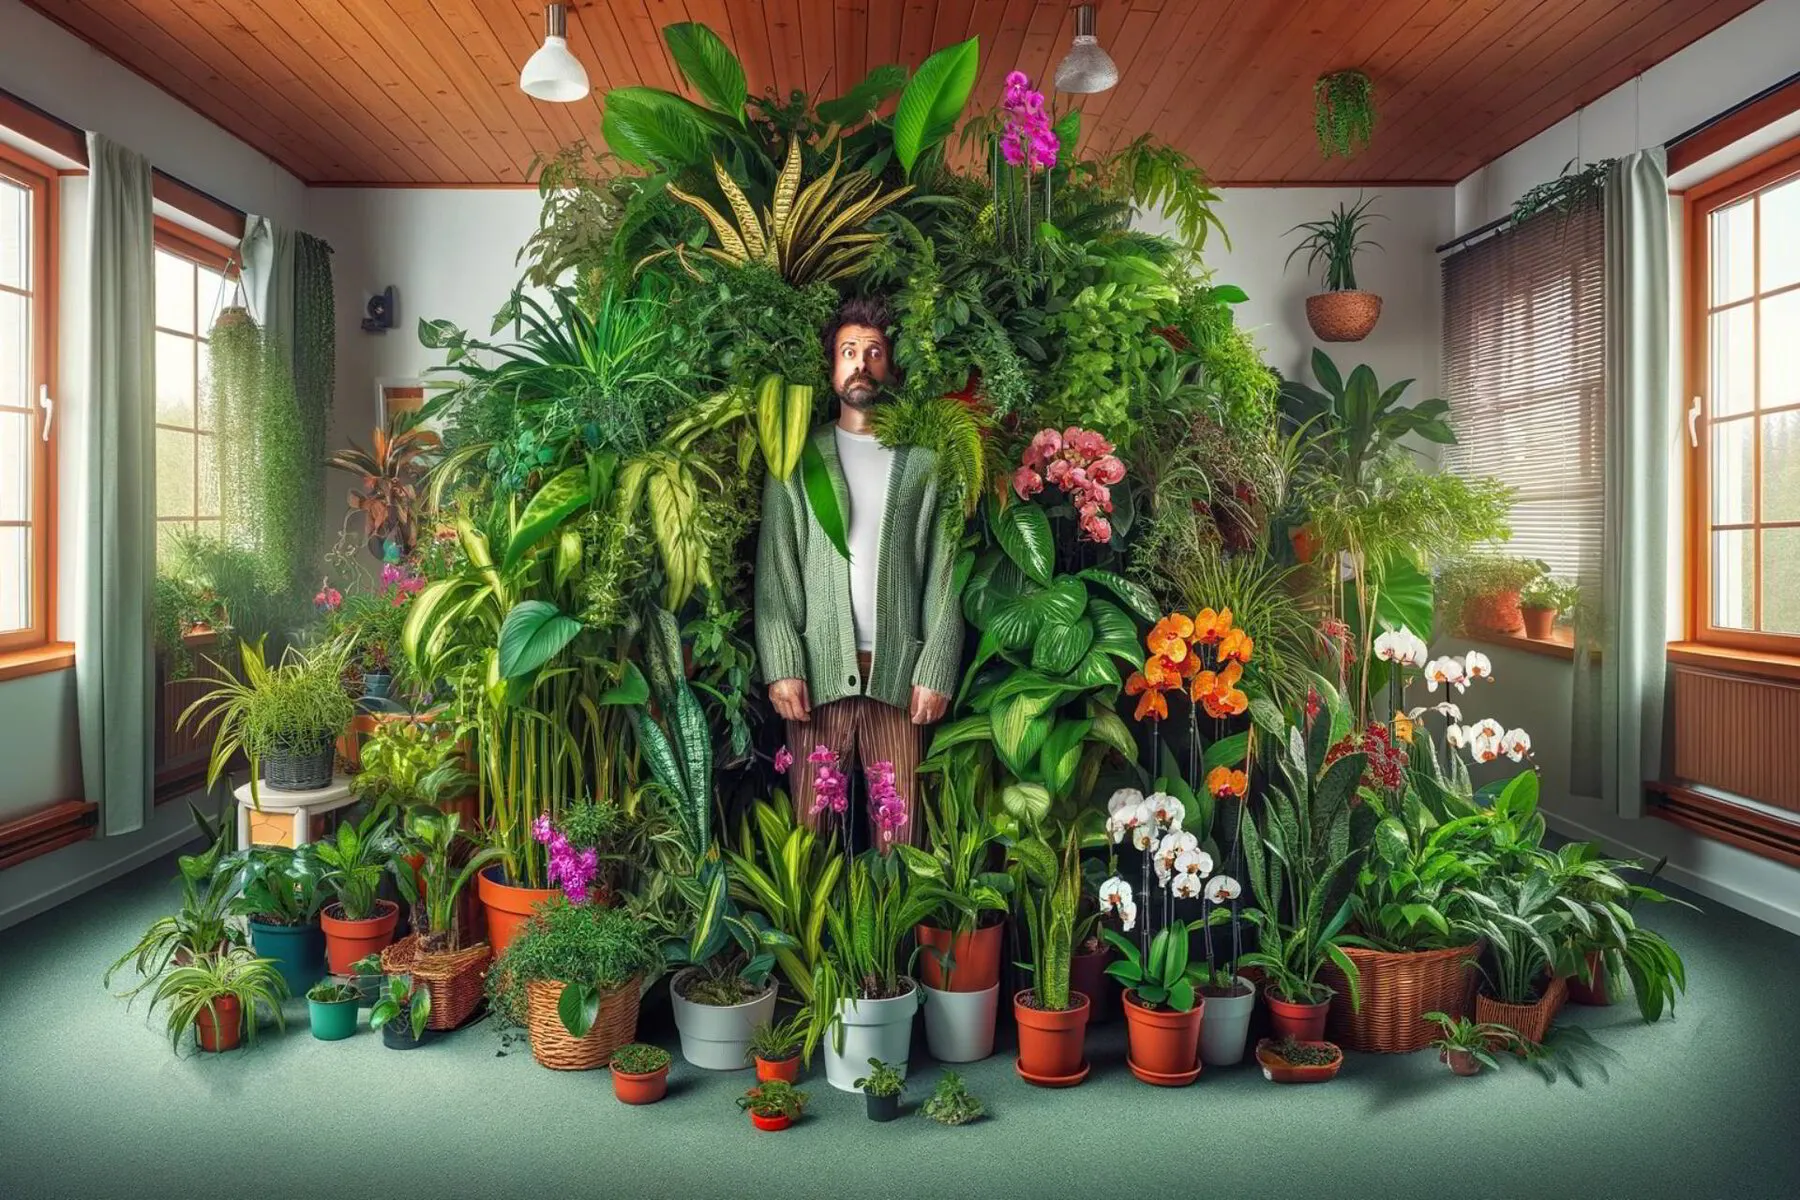 Person standing up, peeking through an overwhelming amount of indoor plants